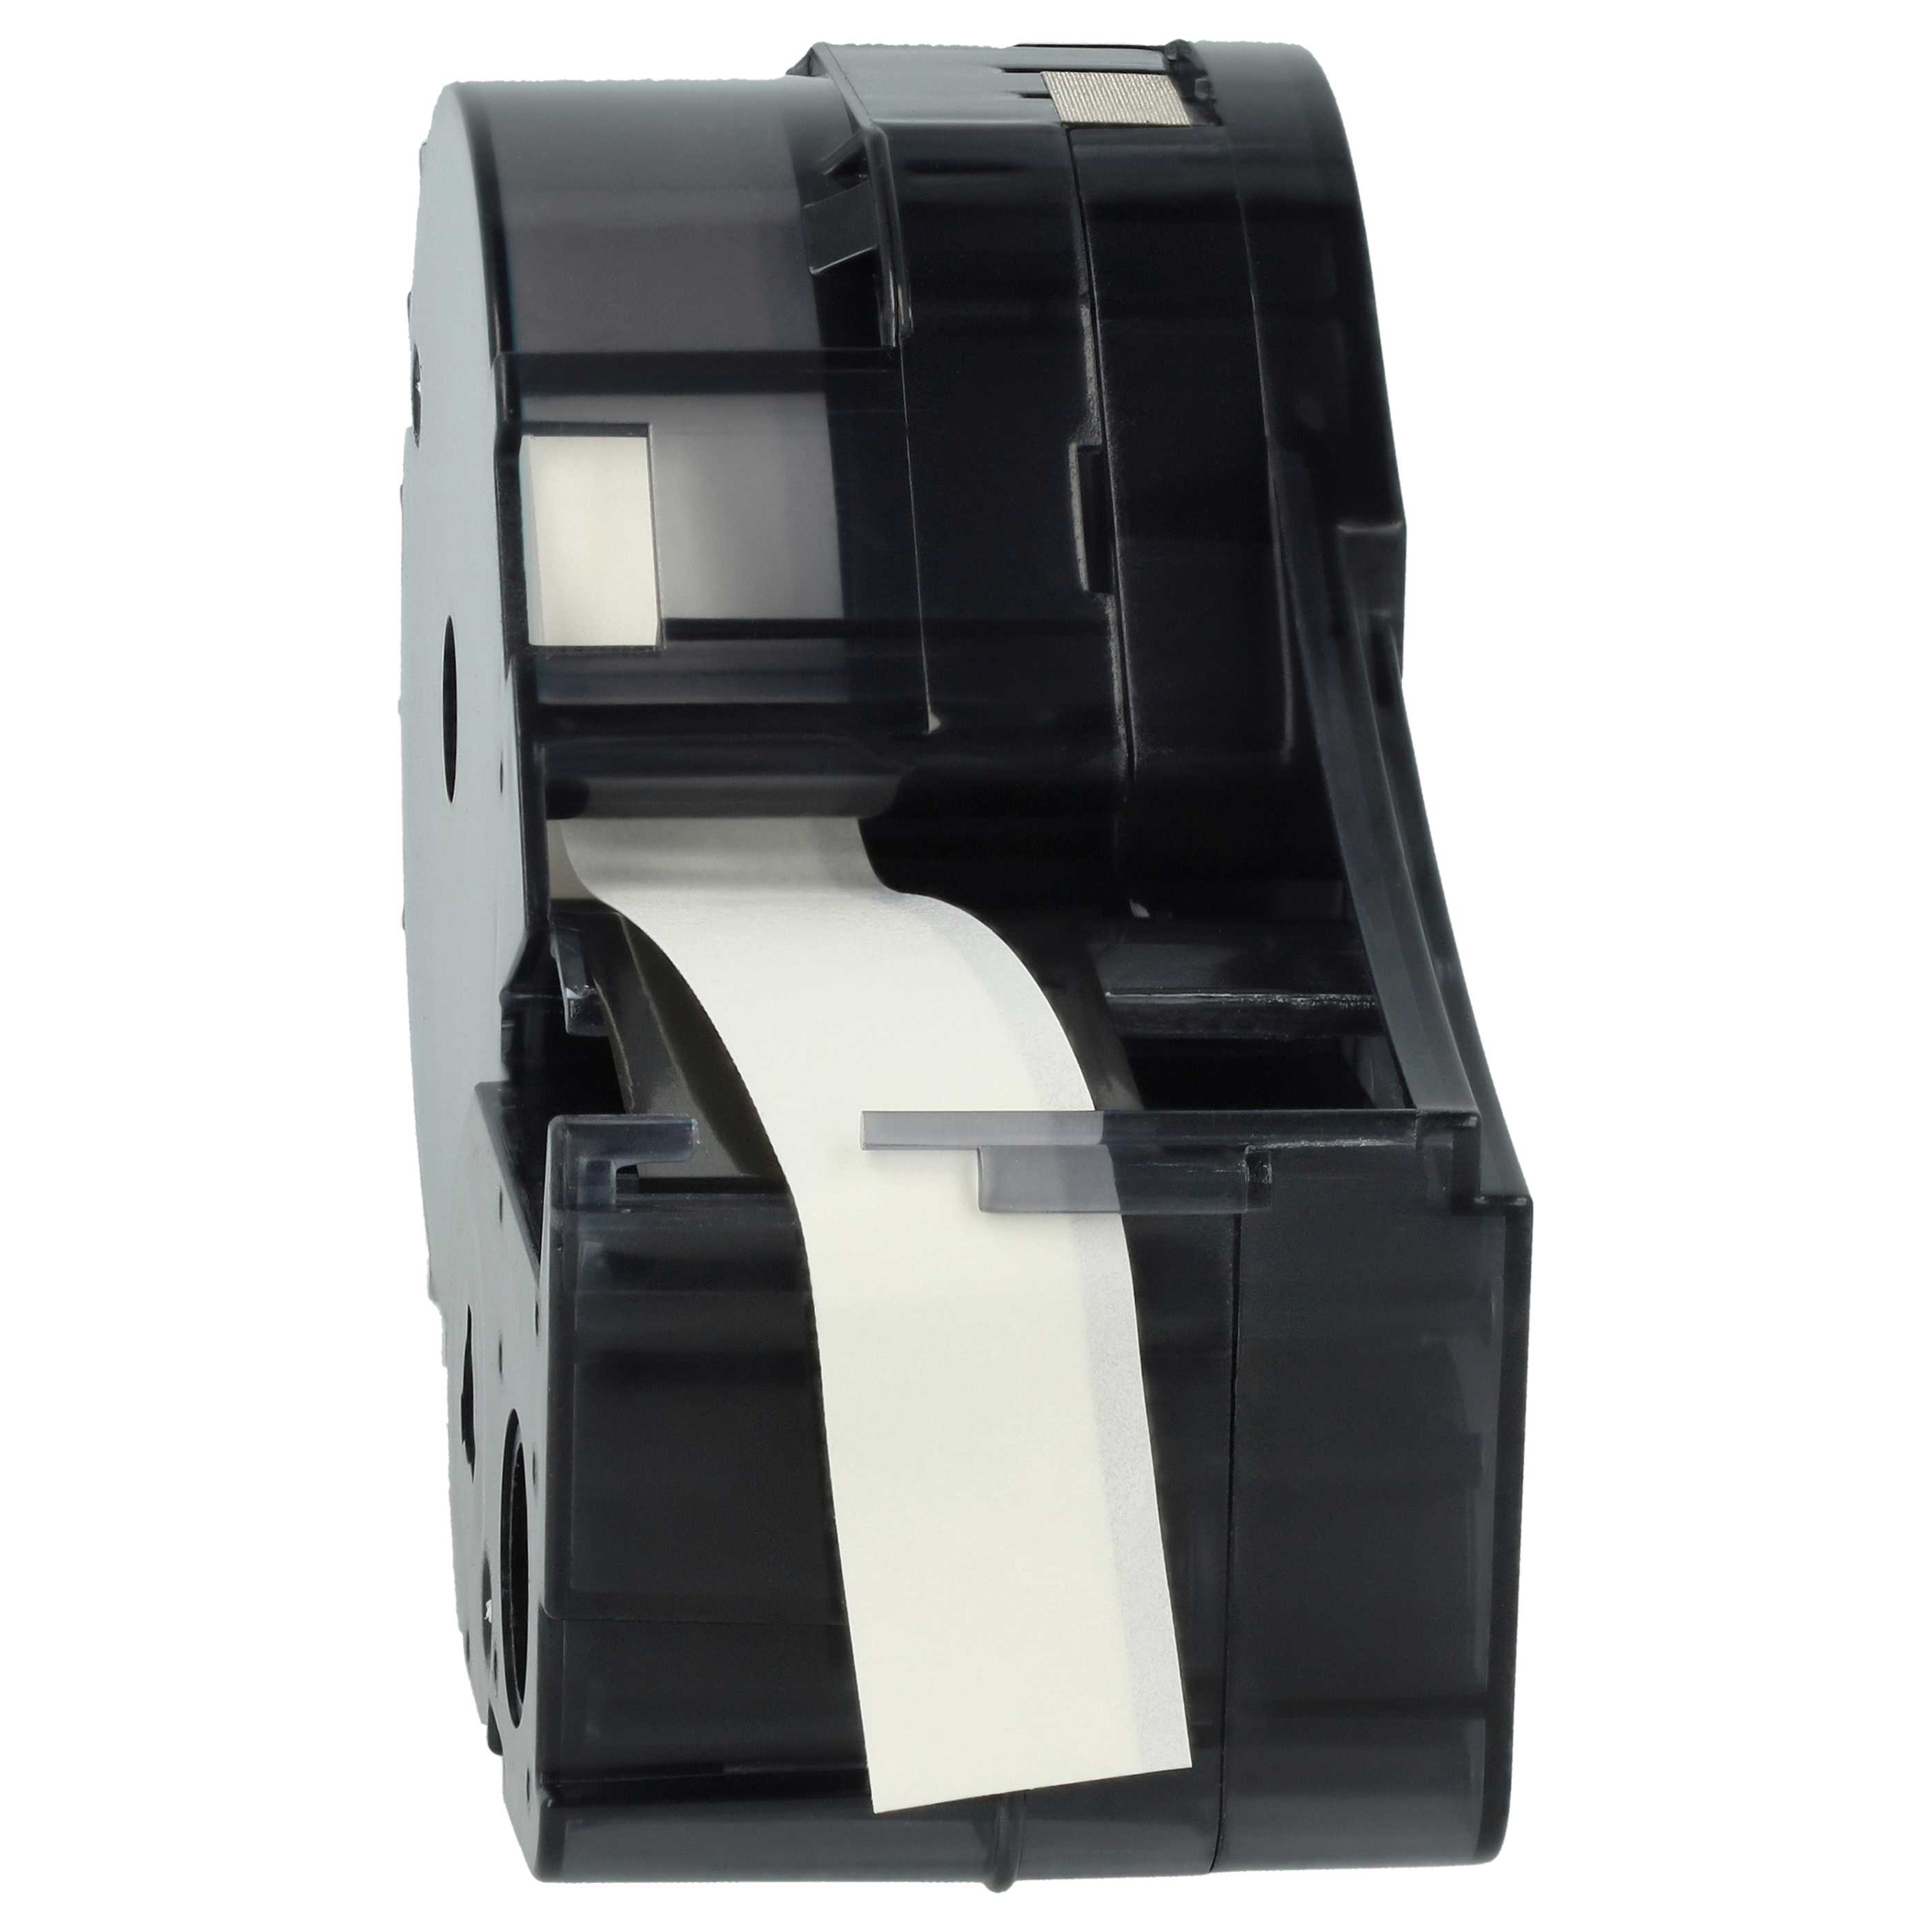 5x Casete cinta escritura reemplaza Brady M21-375-499 Negro su Blanco